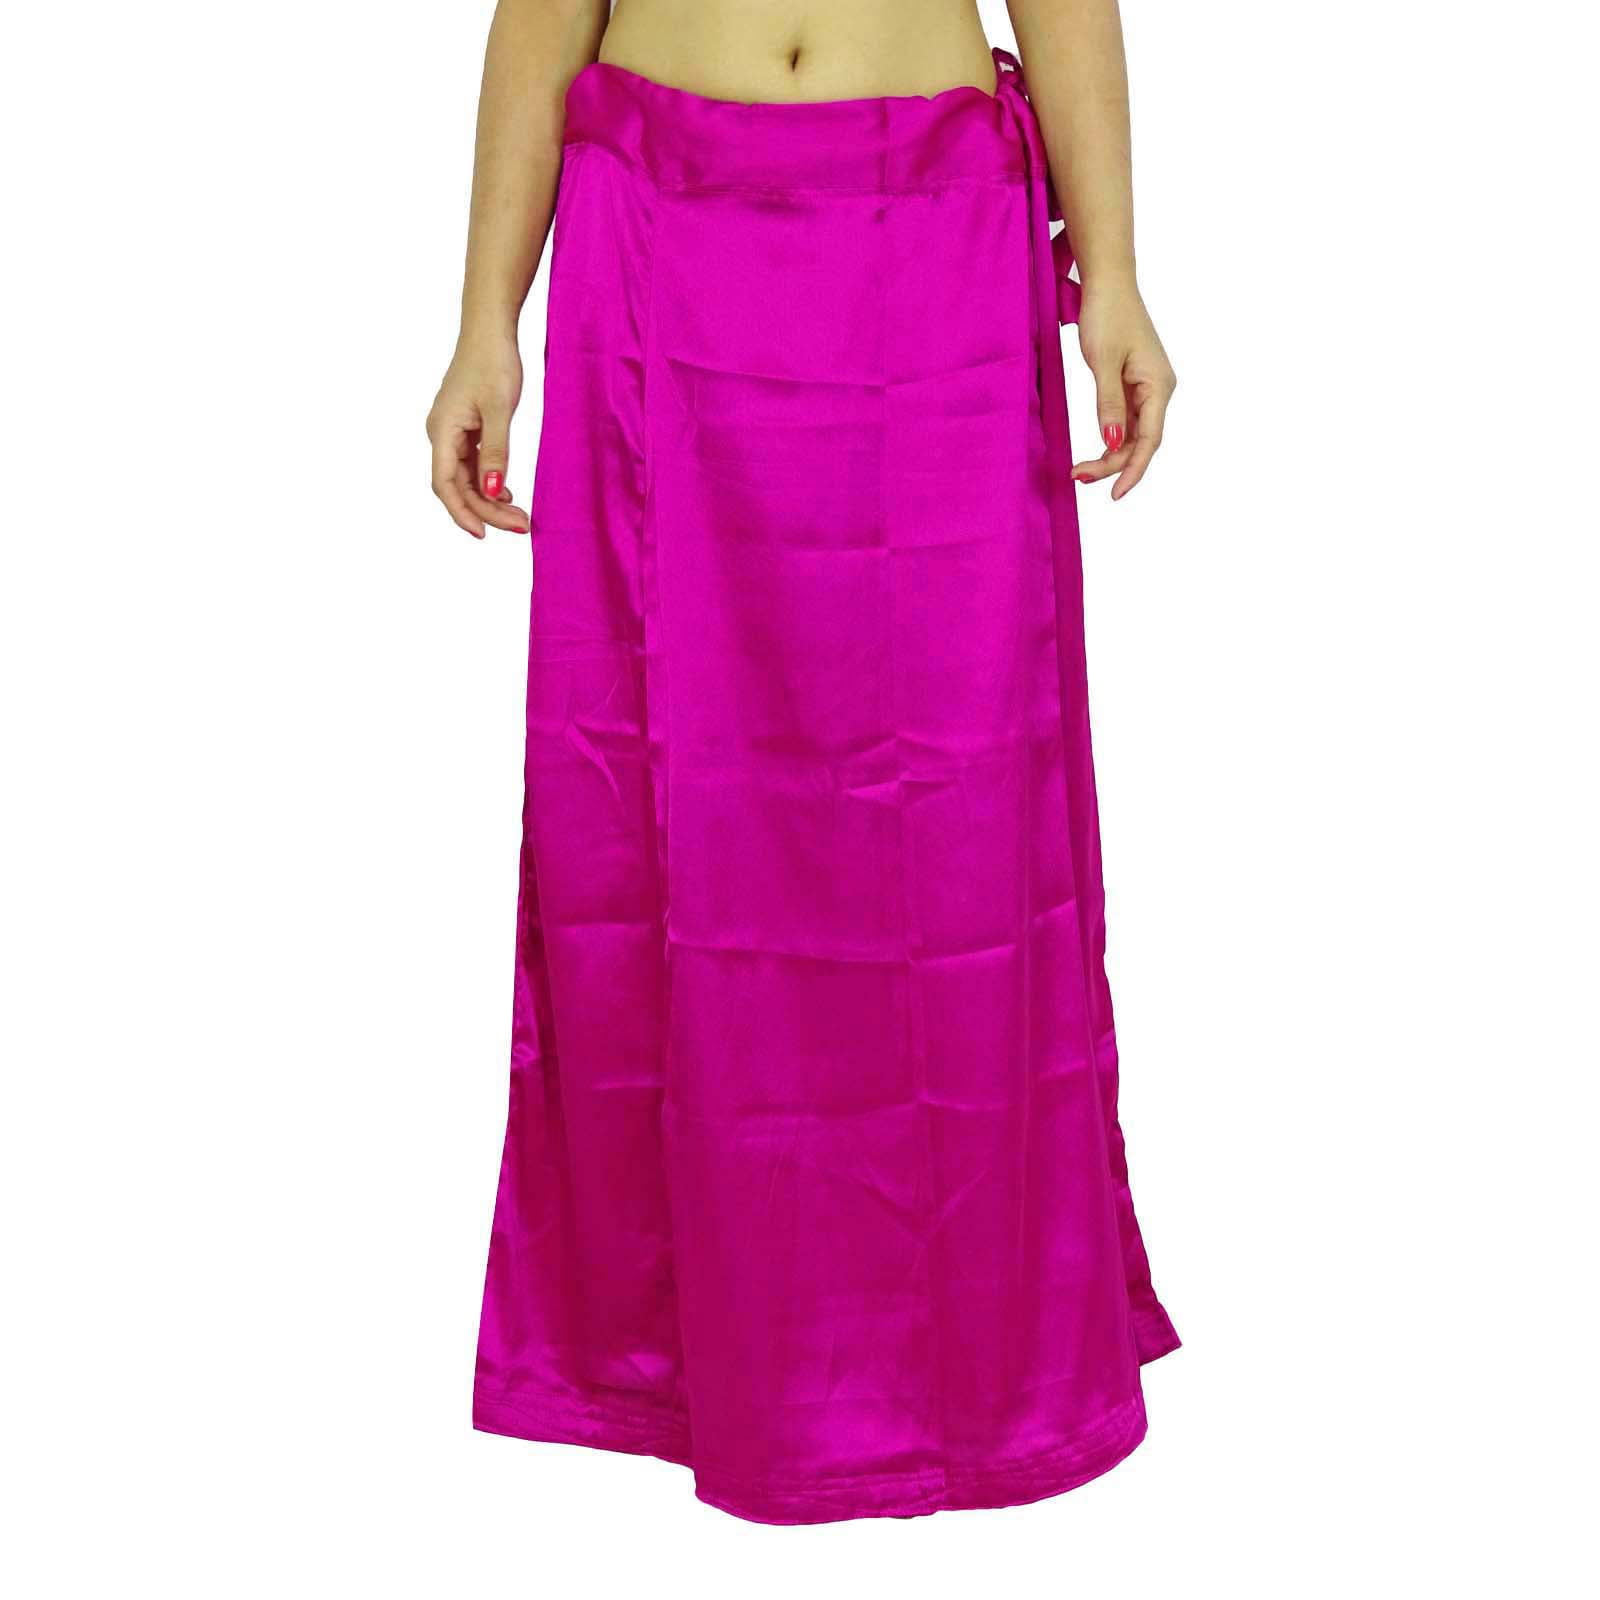 Satin Silk Saree Petticoat Underskirt Indian Lining for Sari Free Size